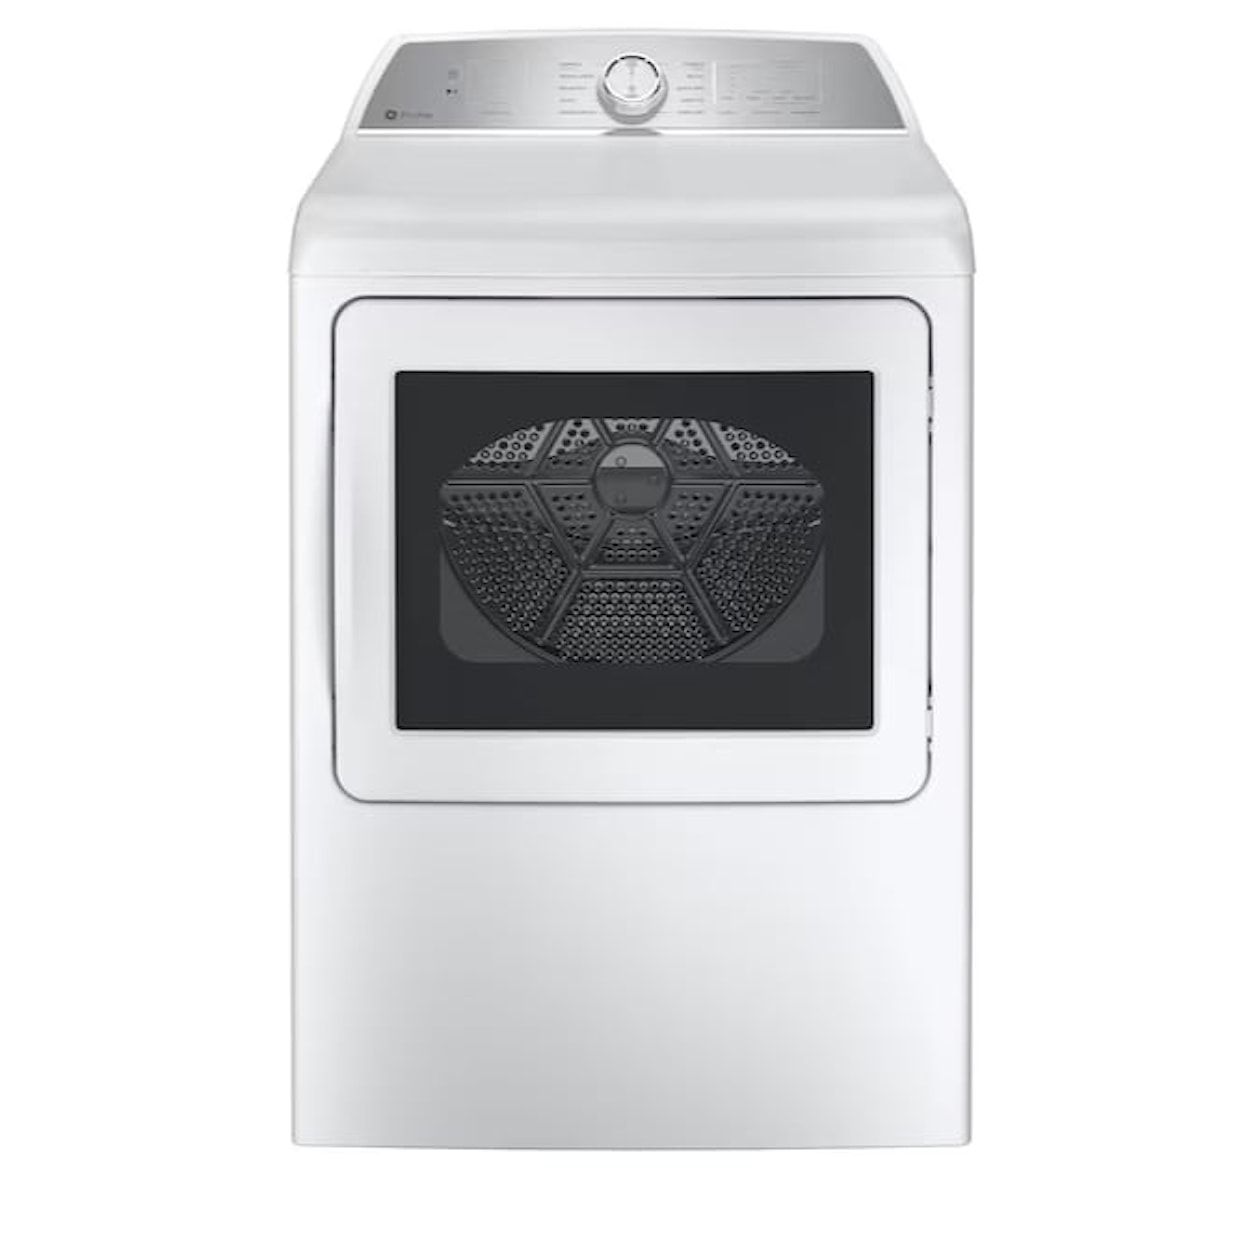 GE Appliances Laundry 7.4 cu. ft. Electric Dryer